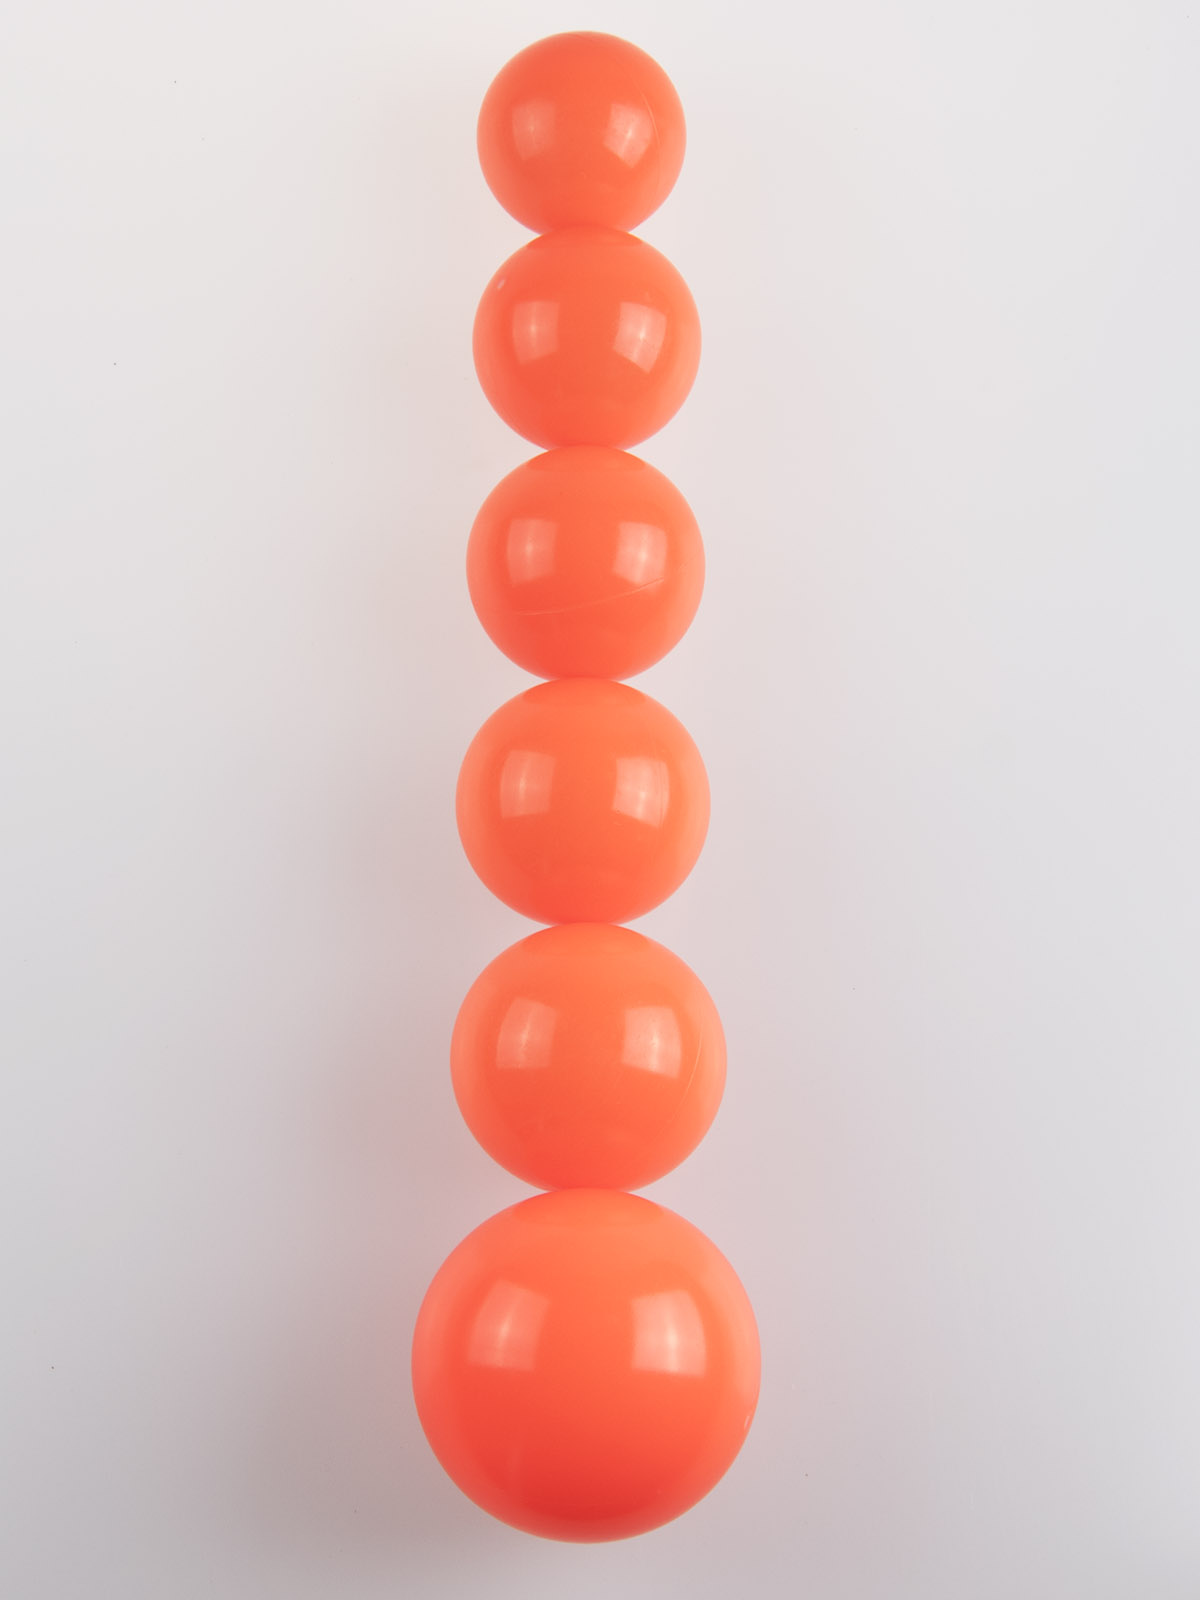 seven sizes of juggling balls